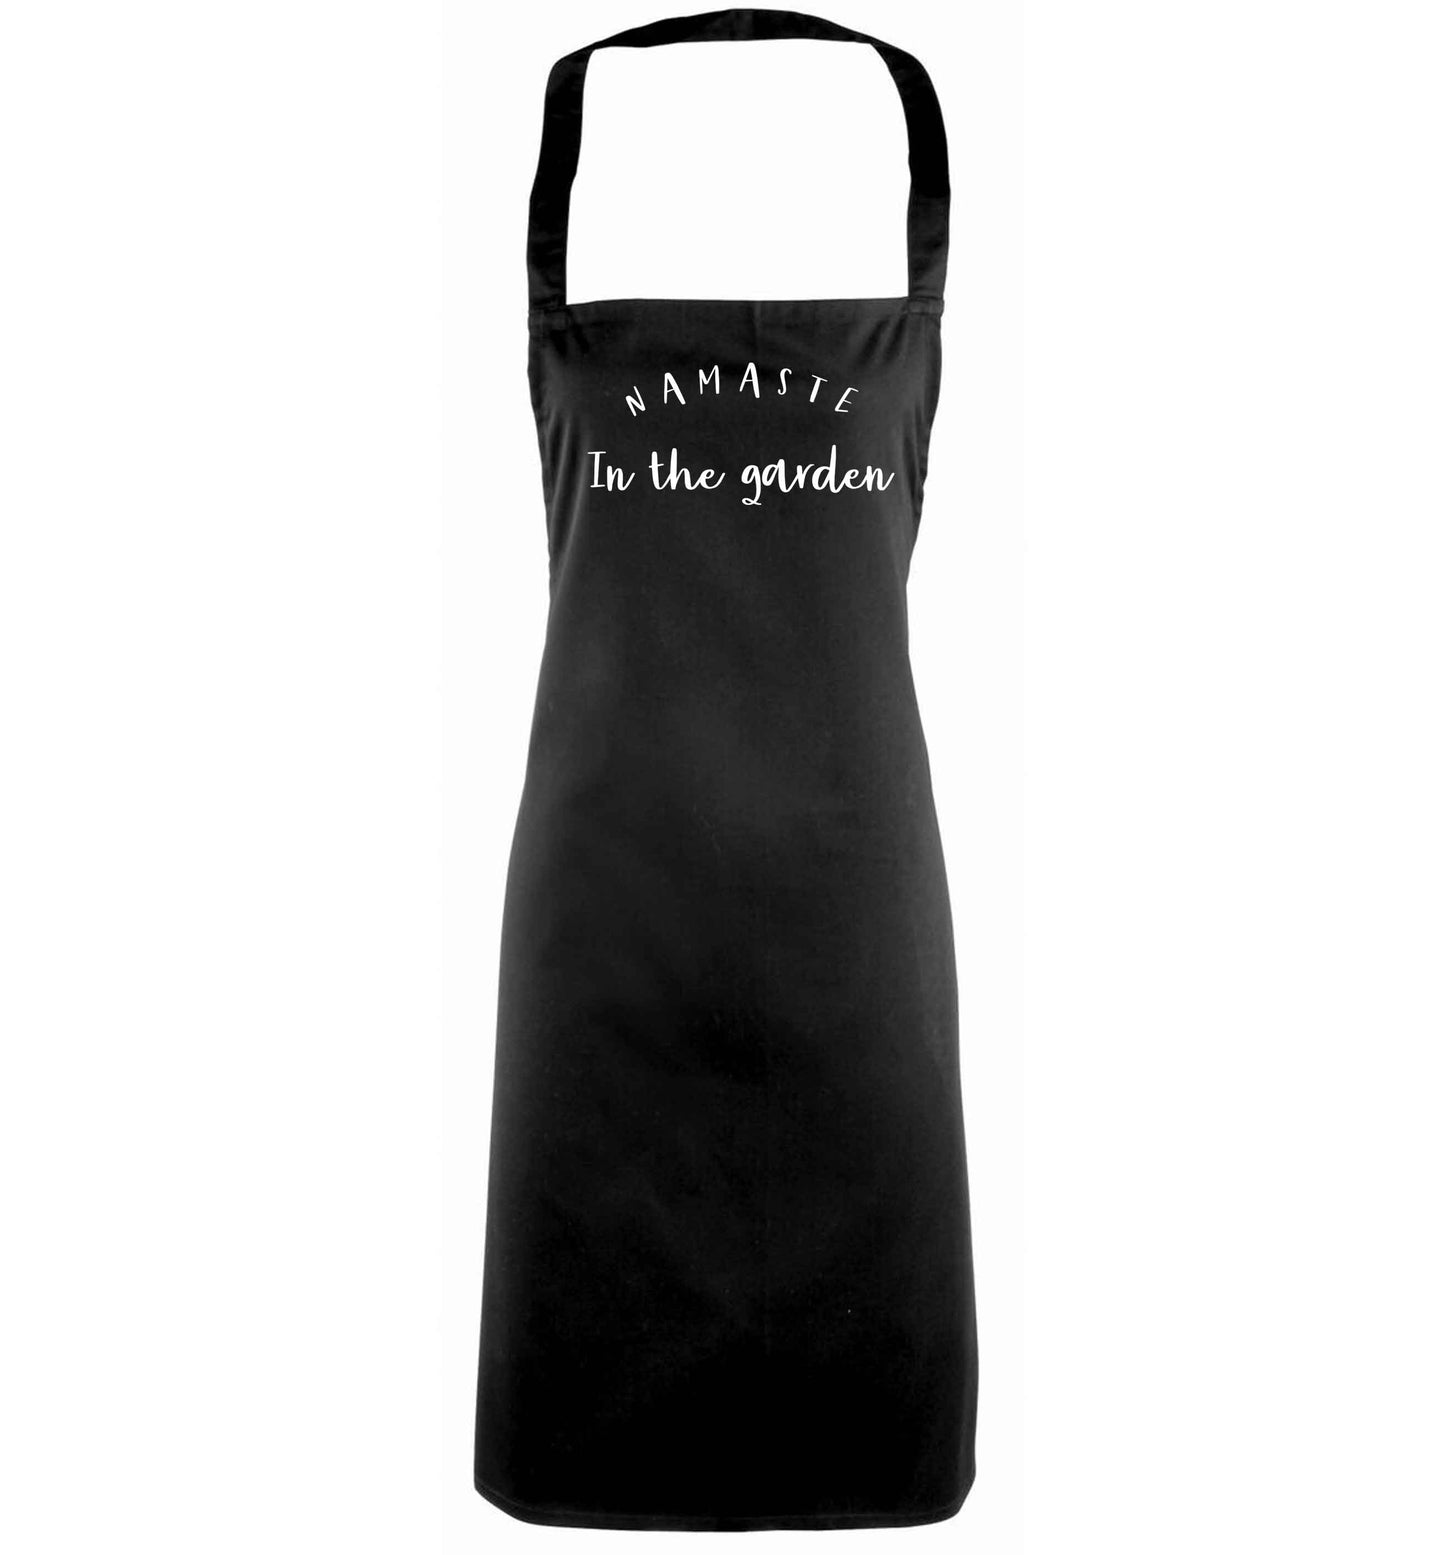 Namaste in the garden black apron